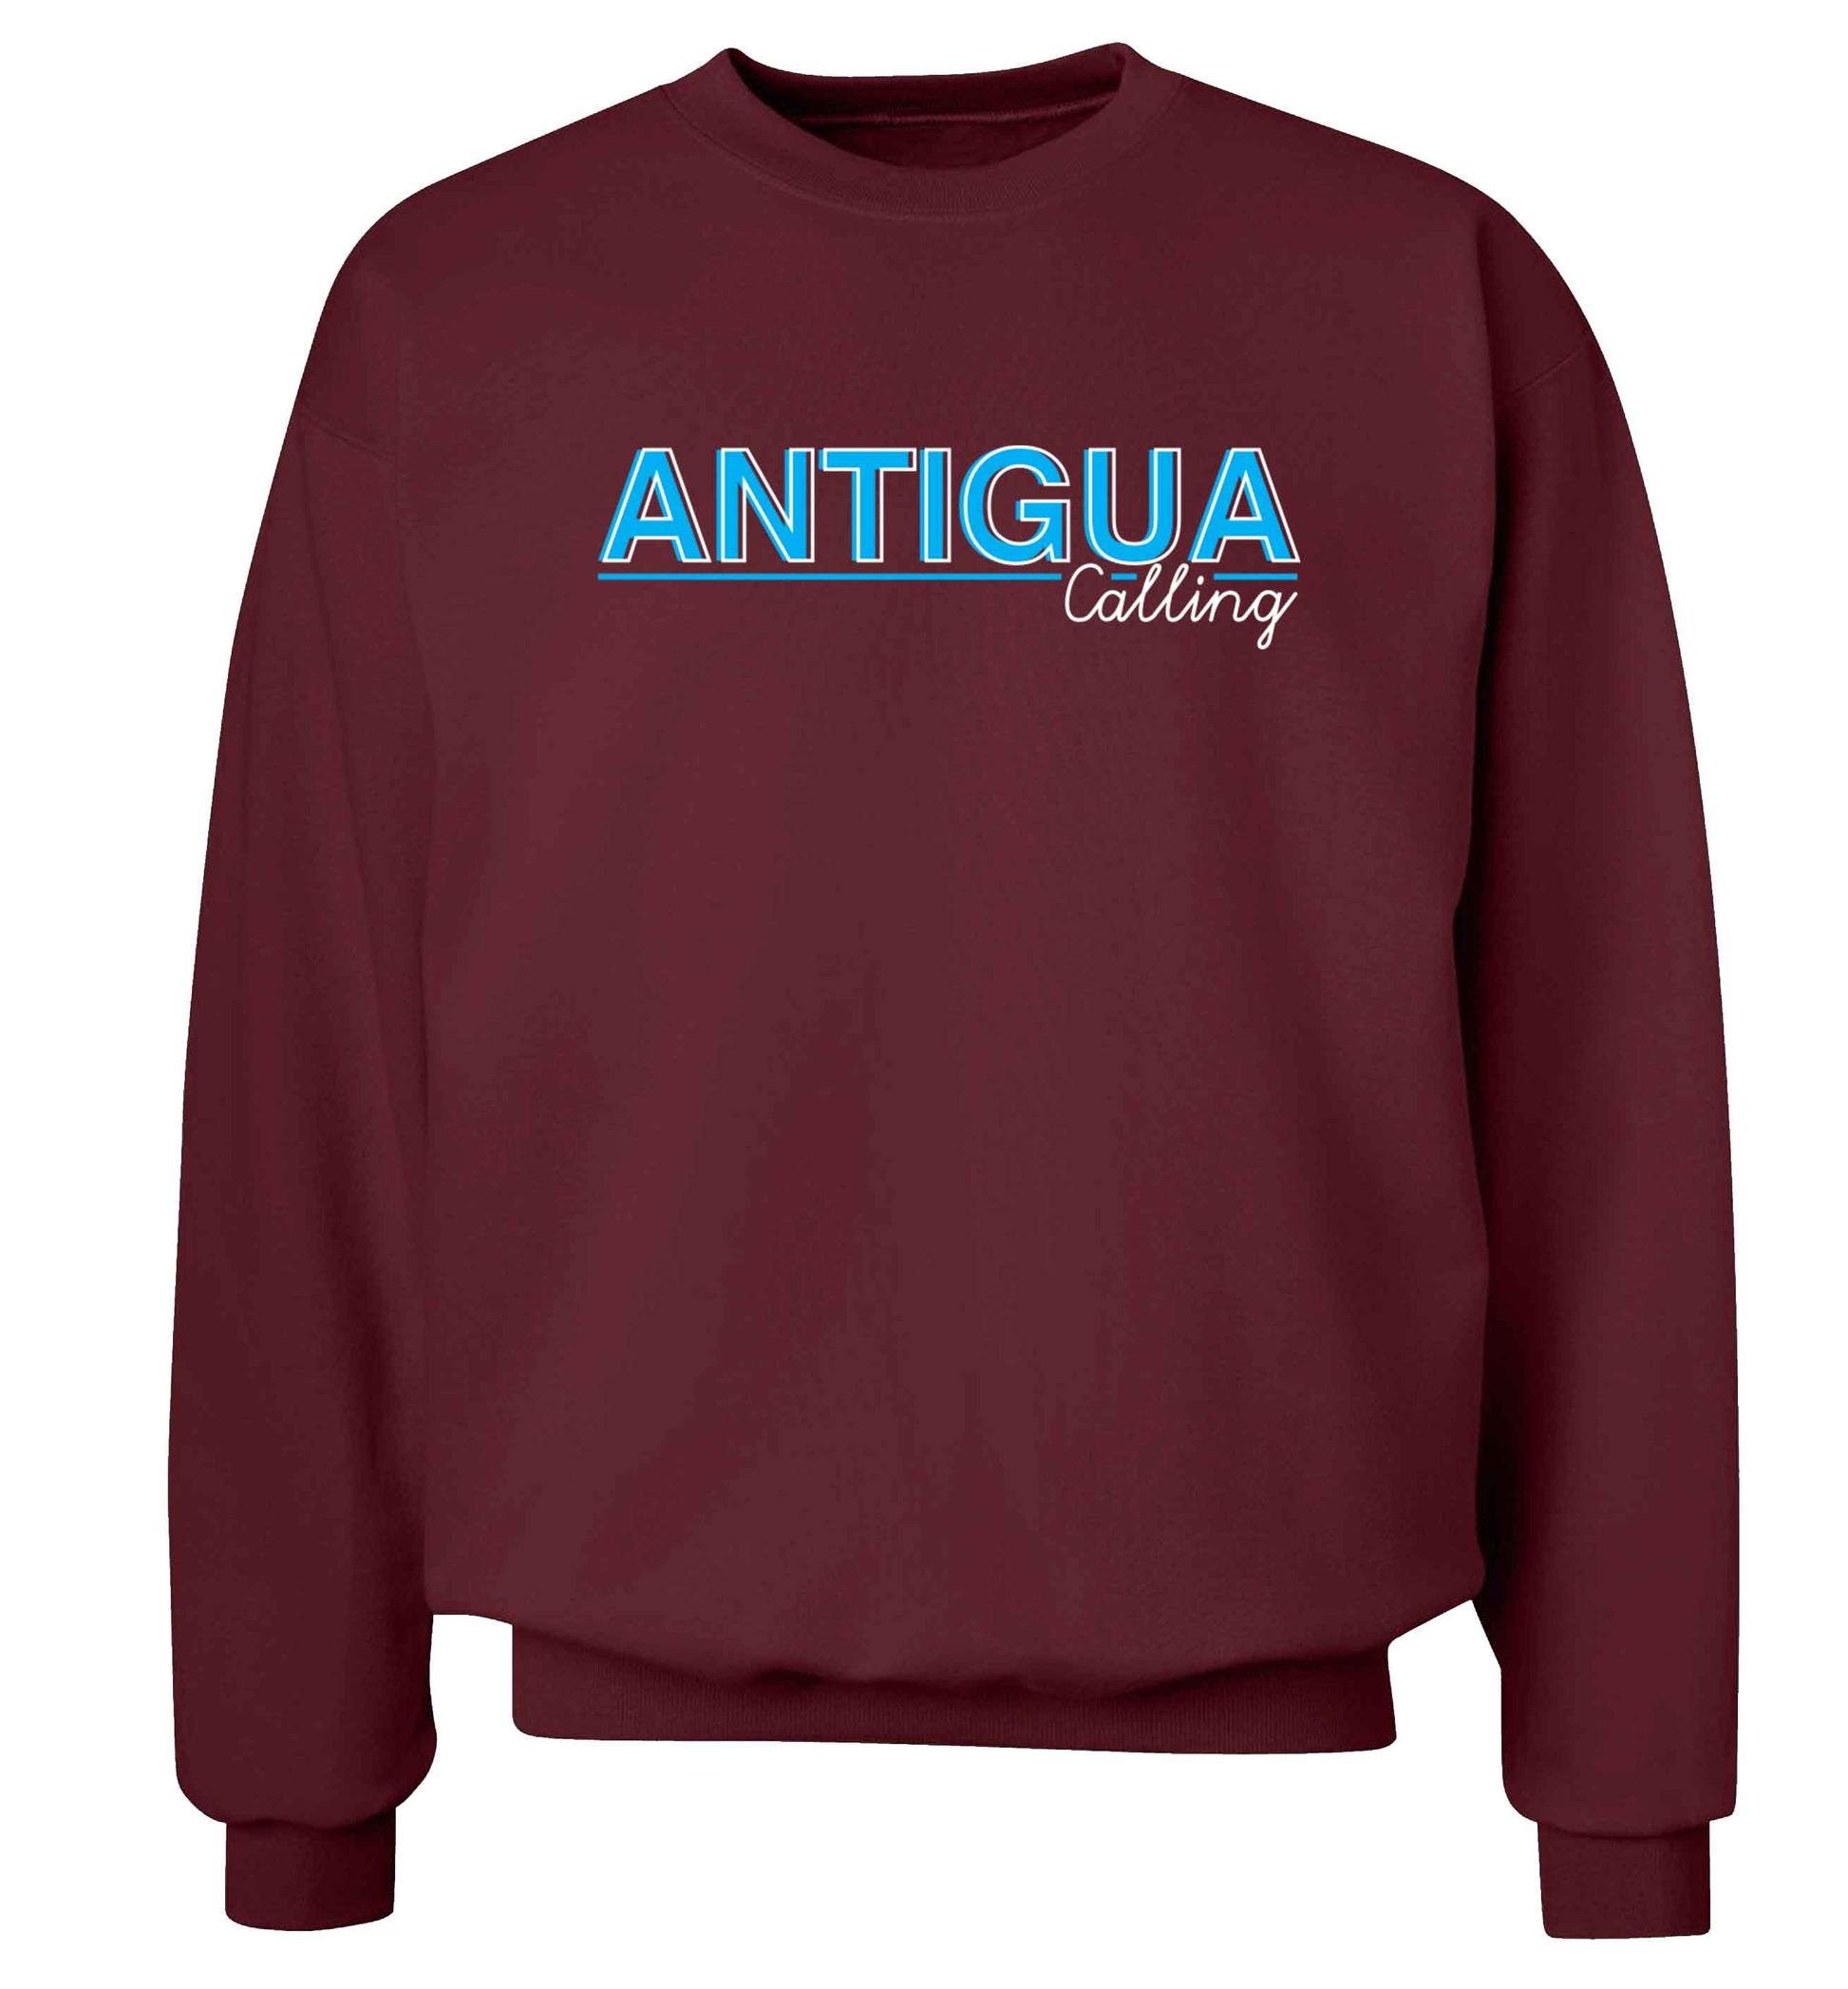 Antigua calling Adult's unisex maroon Sweater 2XL